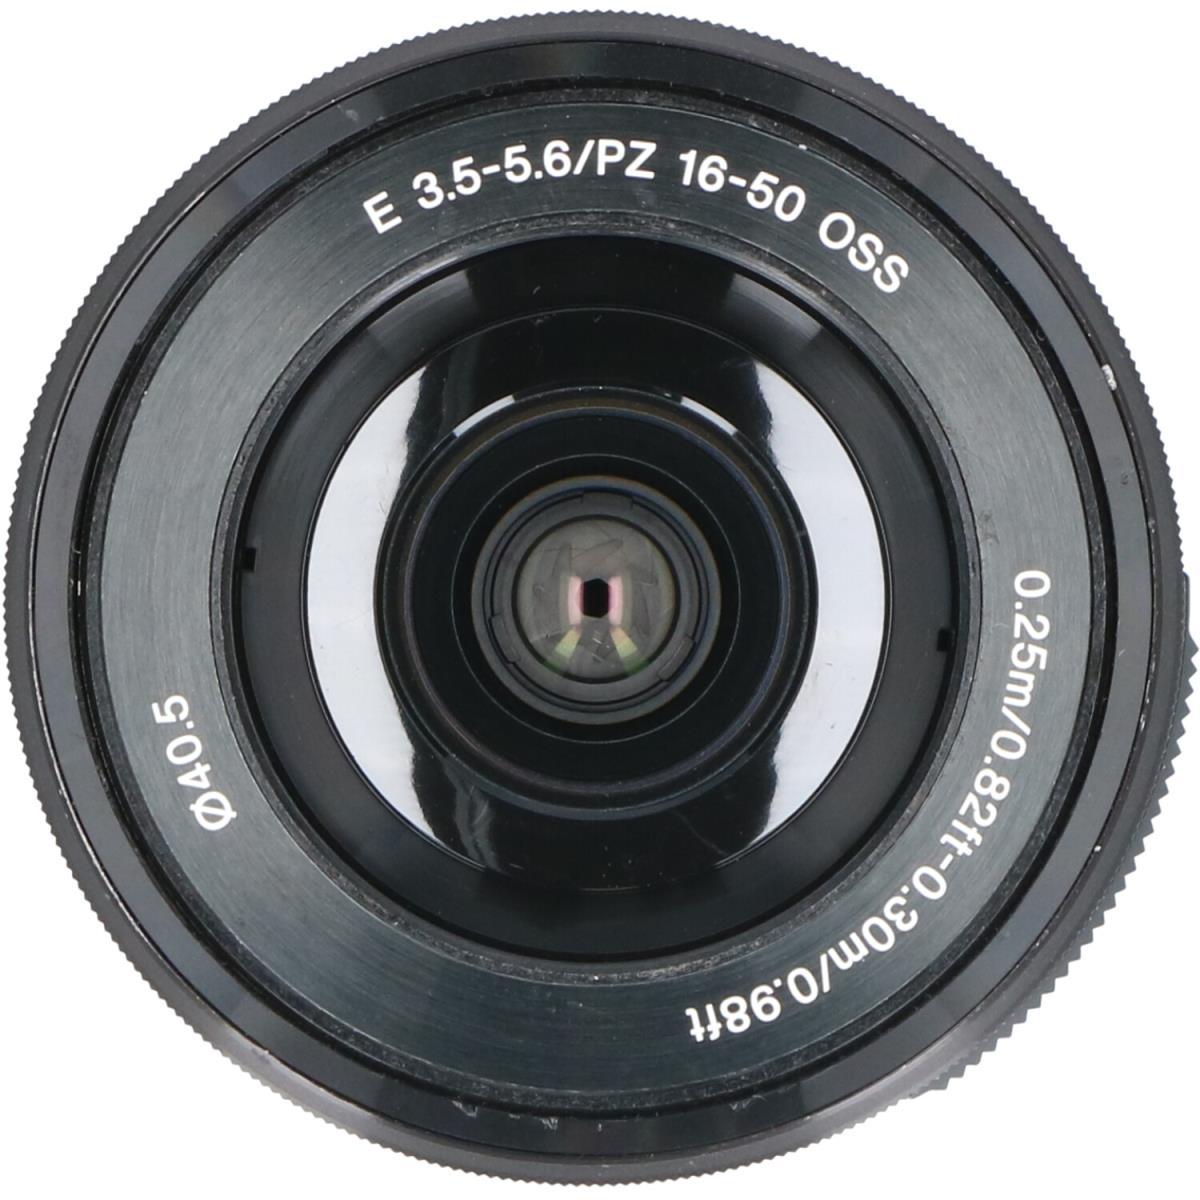 SONY E PZ16-50mm F3.5-5.6 OSS black